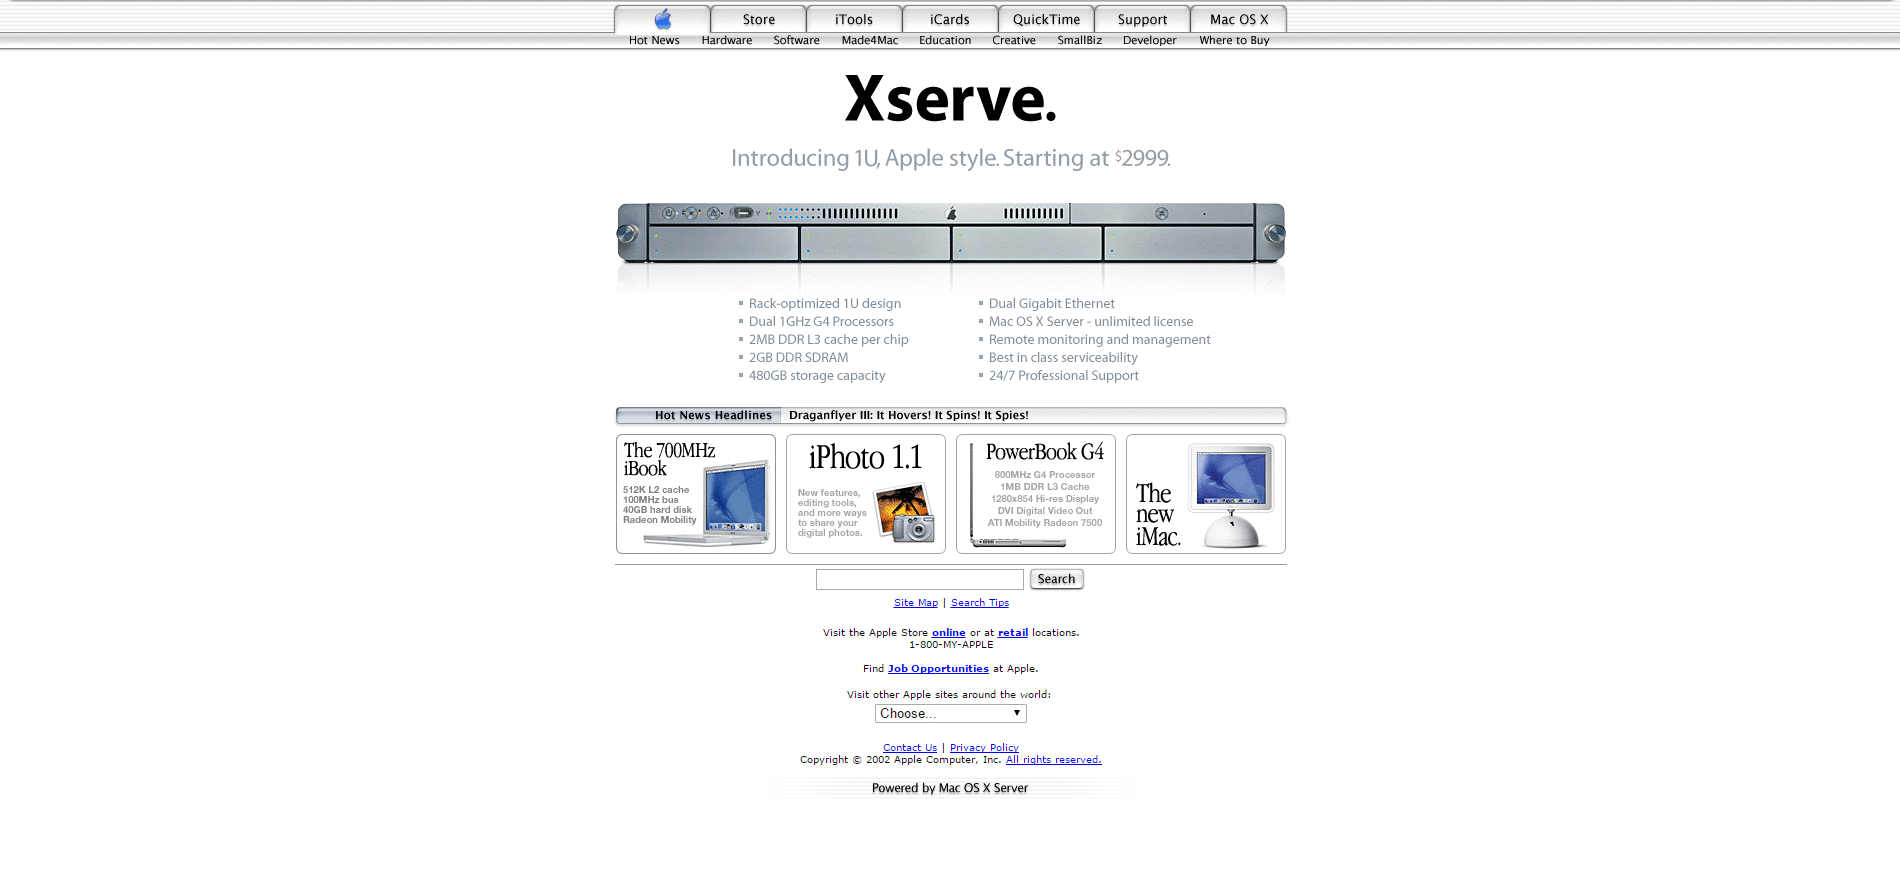 apple.com Website Design in 2002